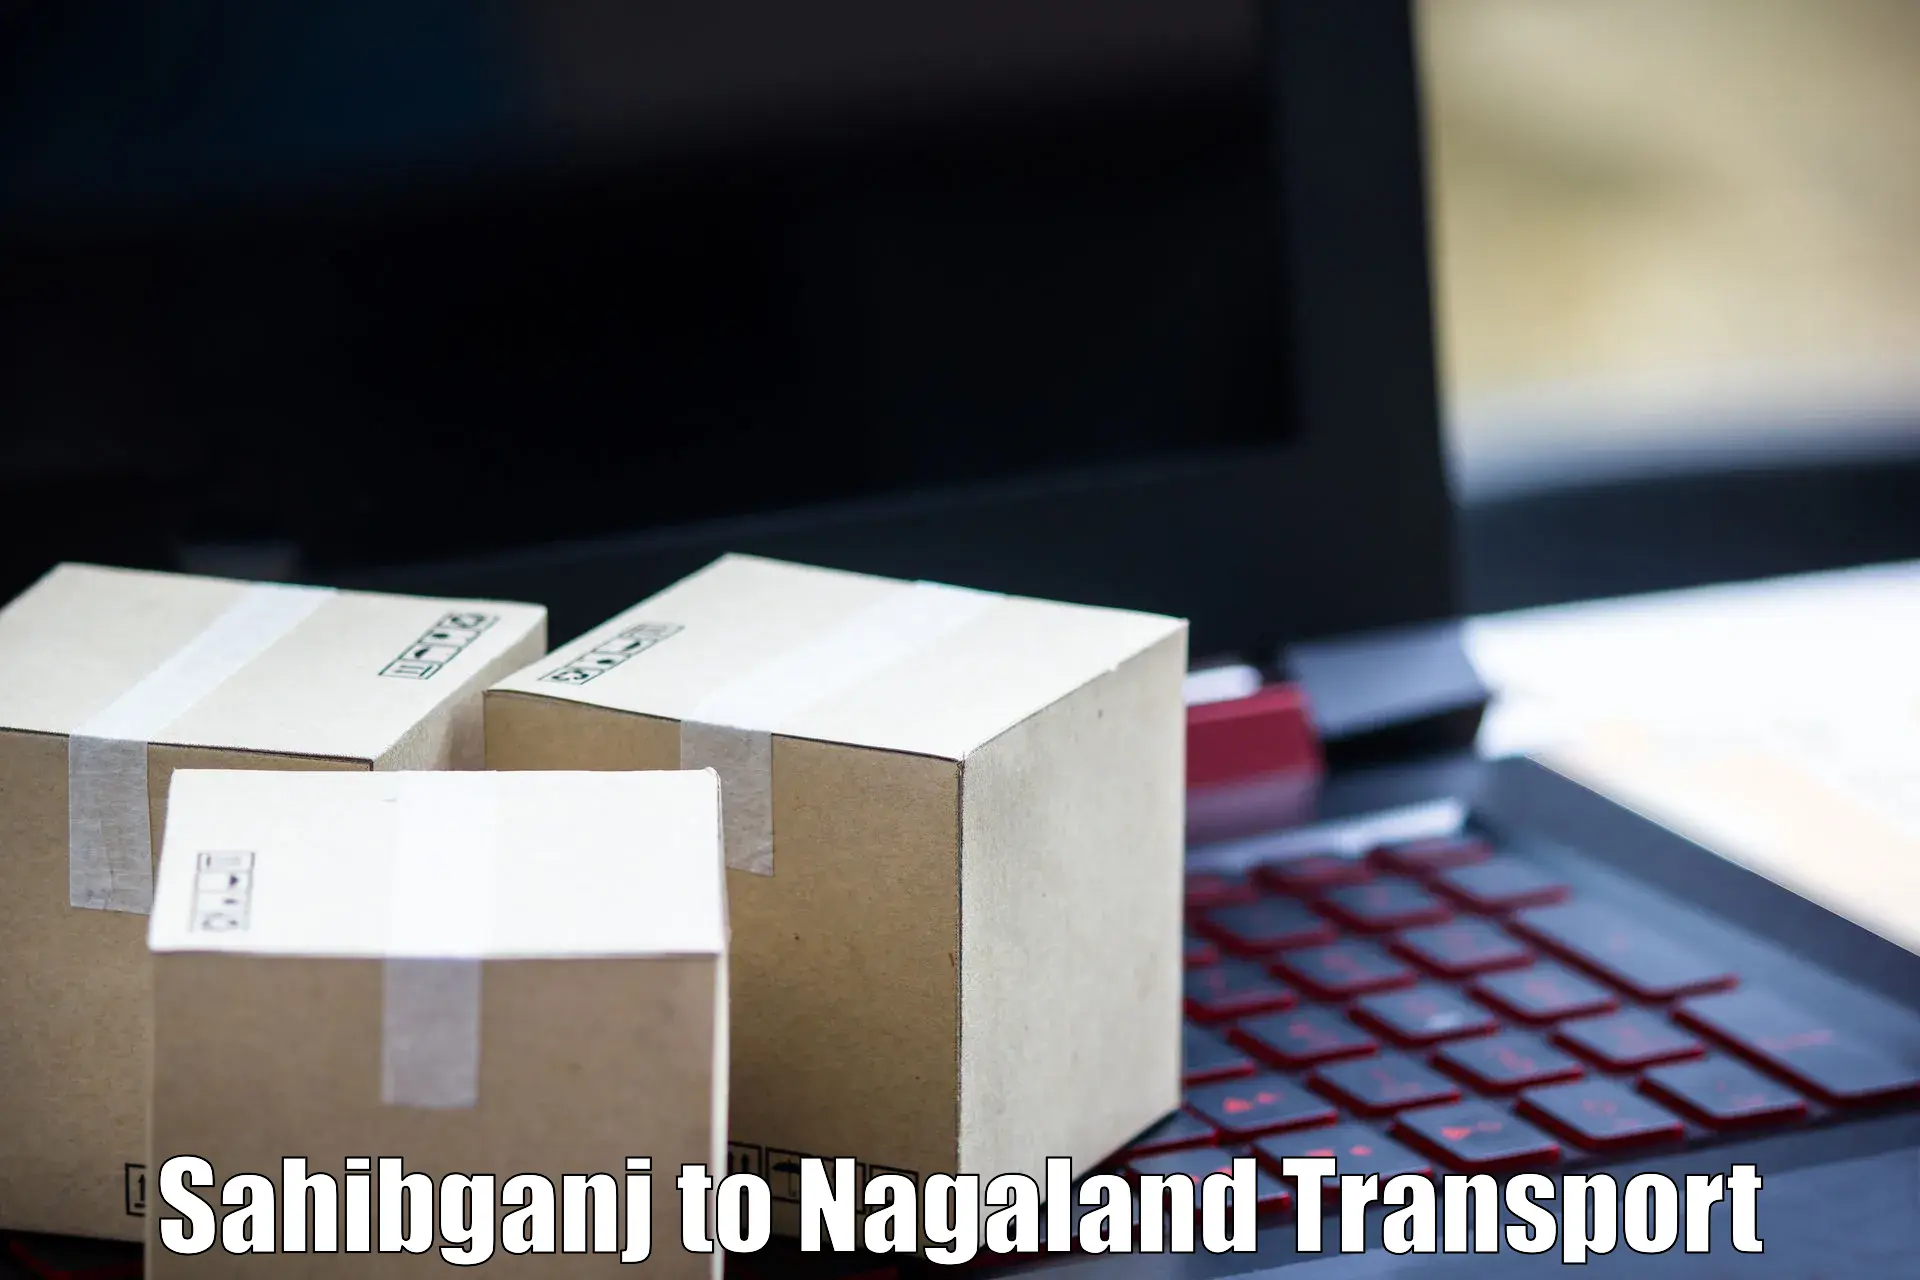 Online transport service Sahibganj to Dimapur